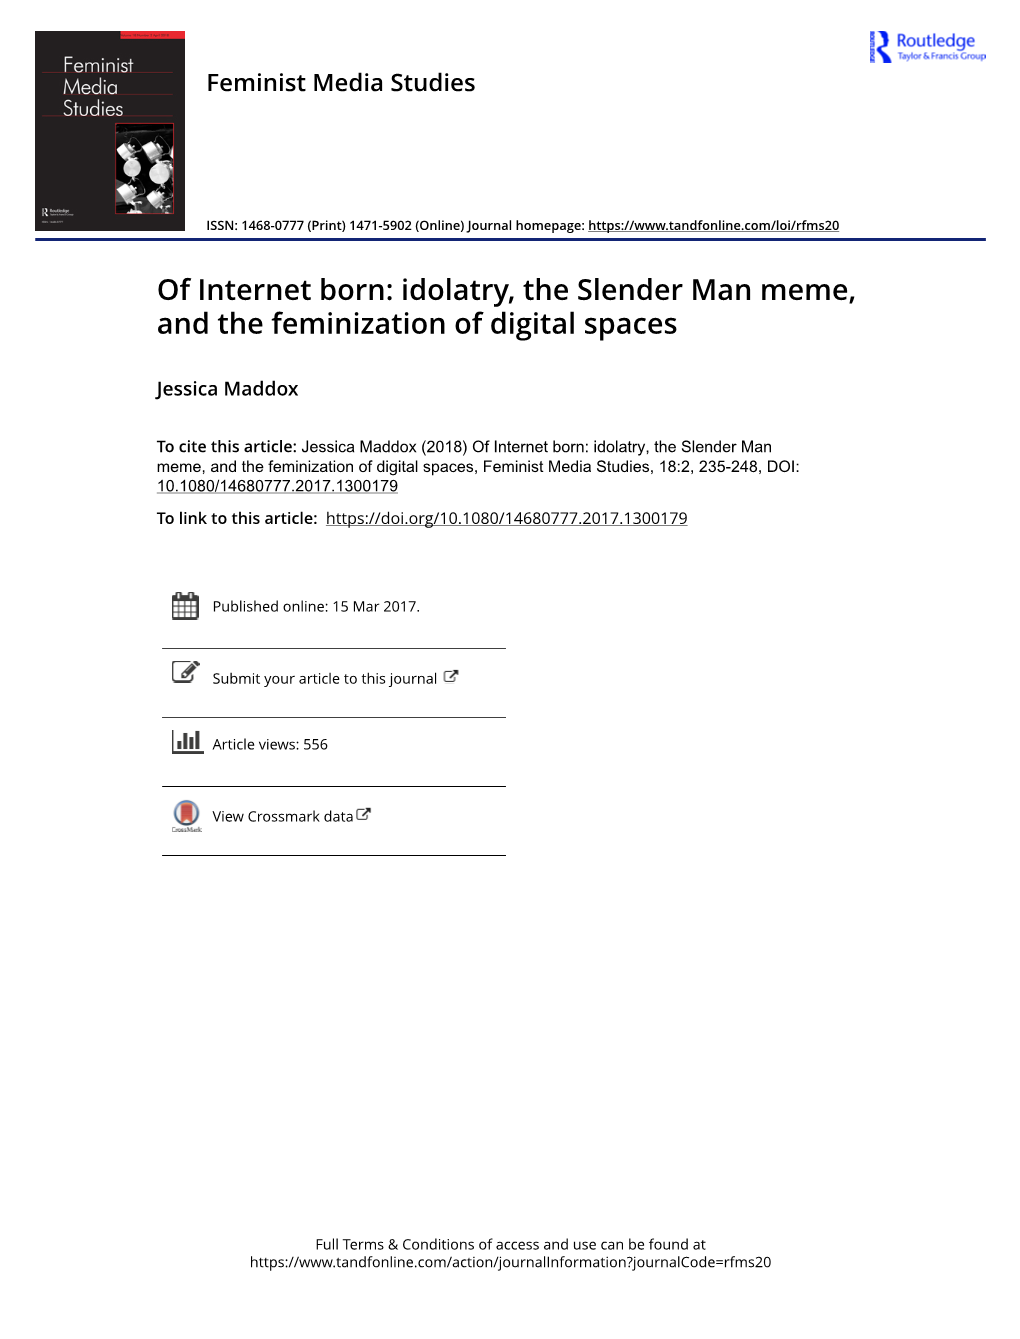 Of Internet Born: Idolatry, the Slender Man Meme, and the Feminization of Digital Spaces